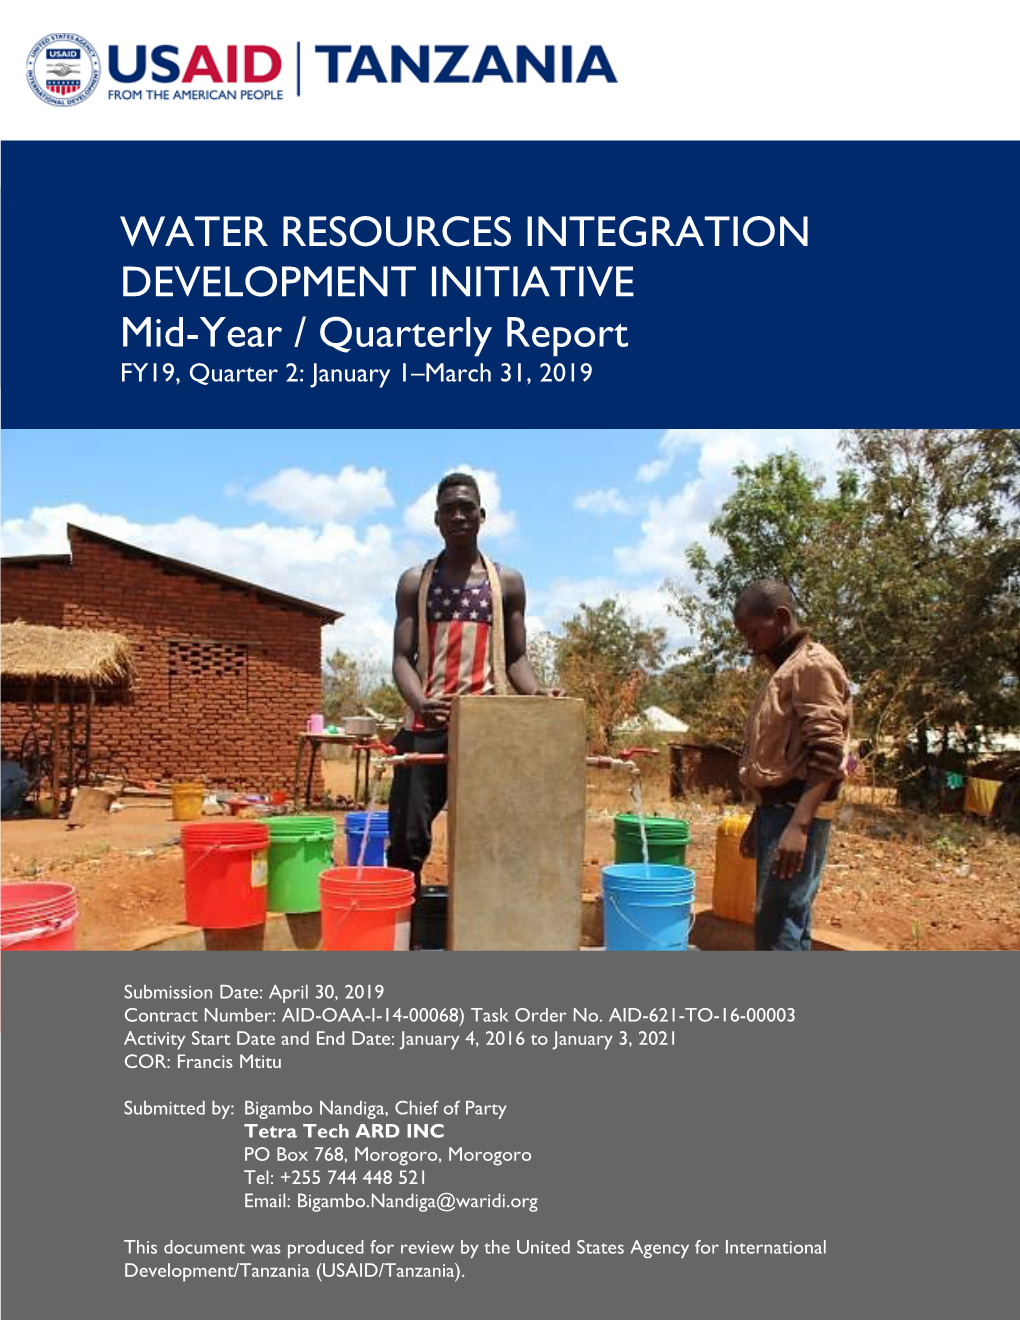 Water Resources Integration Development Initiative (WARIDI)